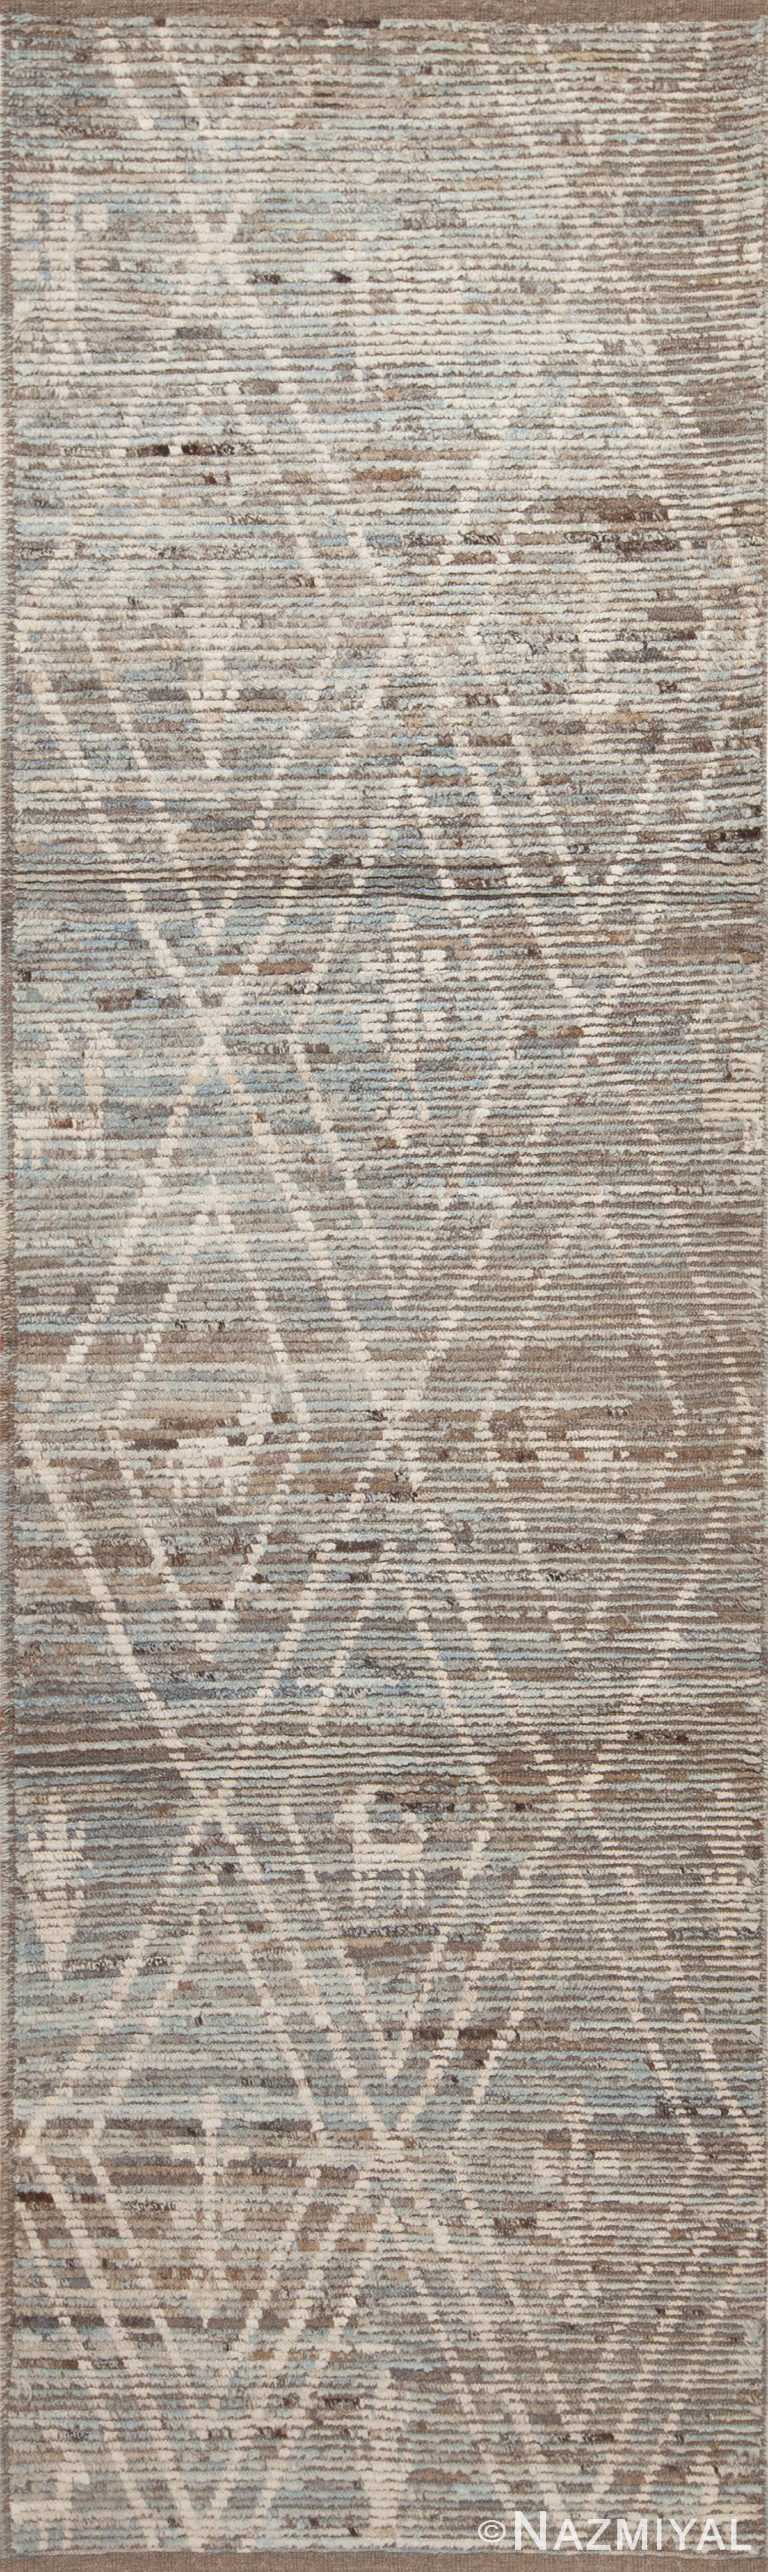 Grey Neutral Color Tribal Geometric Primitive Animal Pattern Modern Hallway Runner Rug 11152 by Nazmiyal Antique rugs